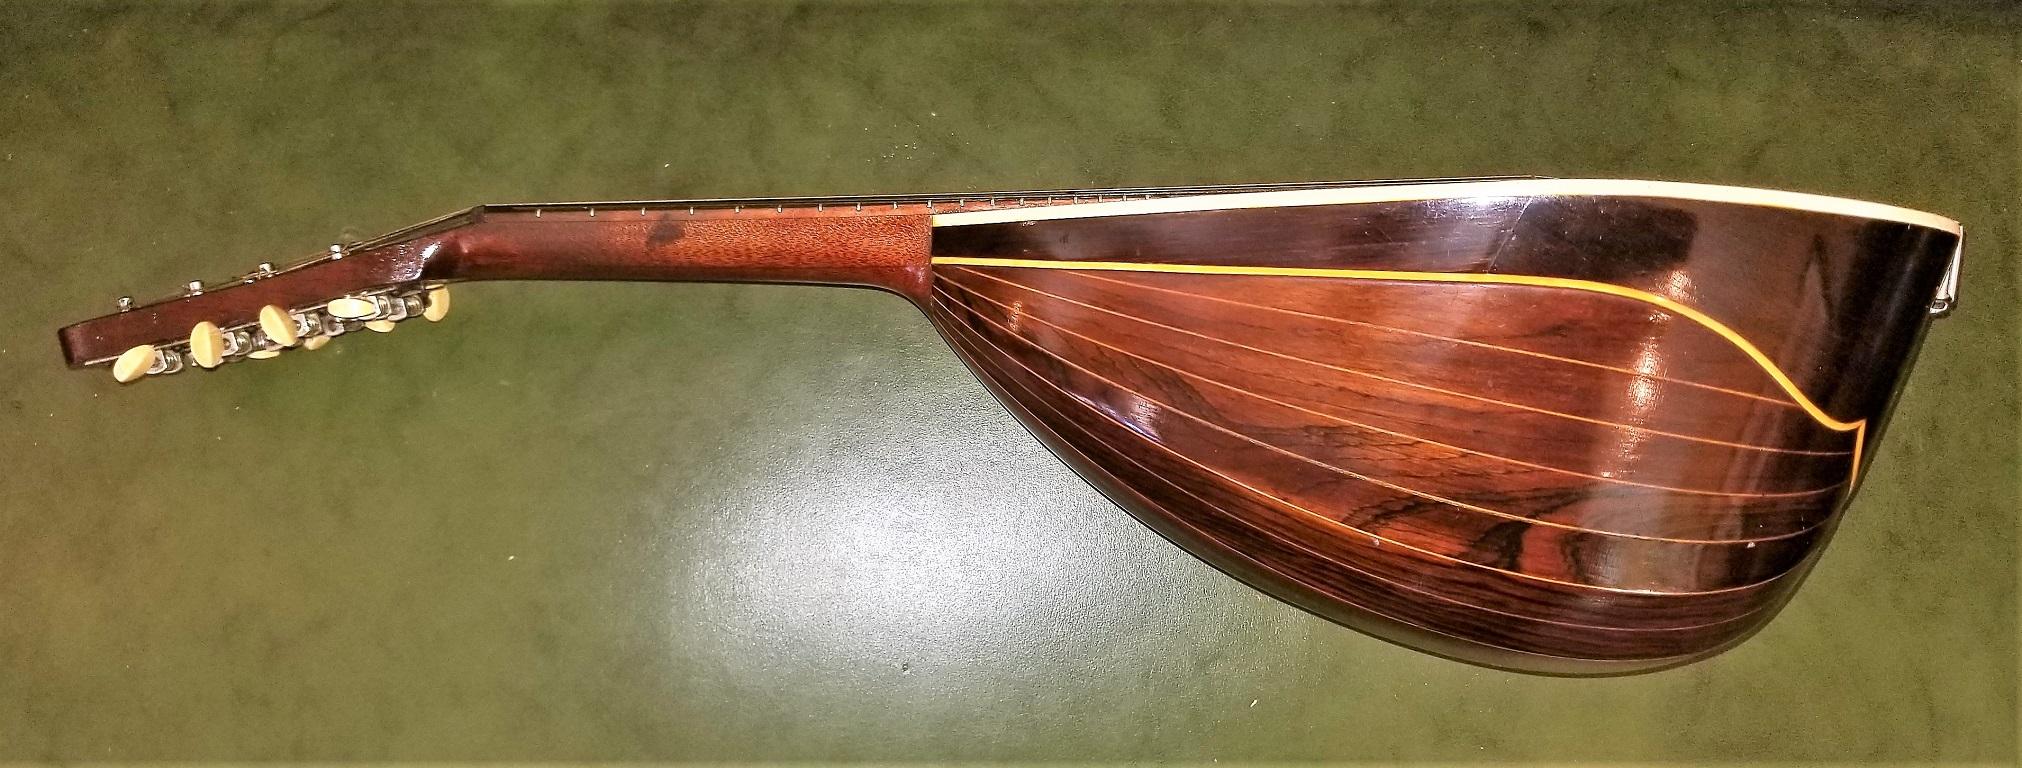 Early 20th Century Italian Mandolin with Original Case 2